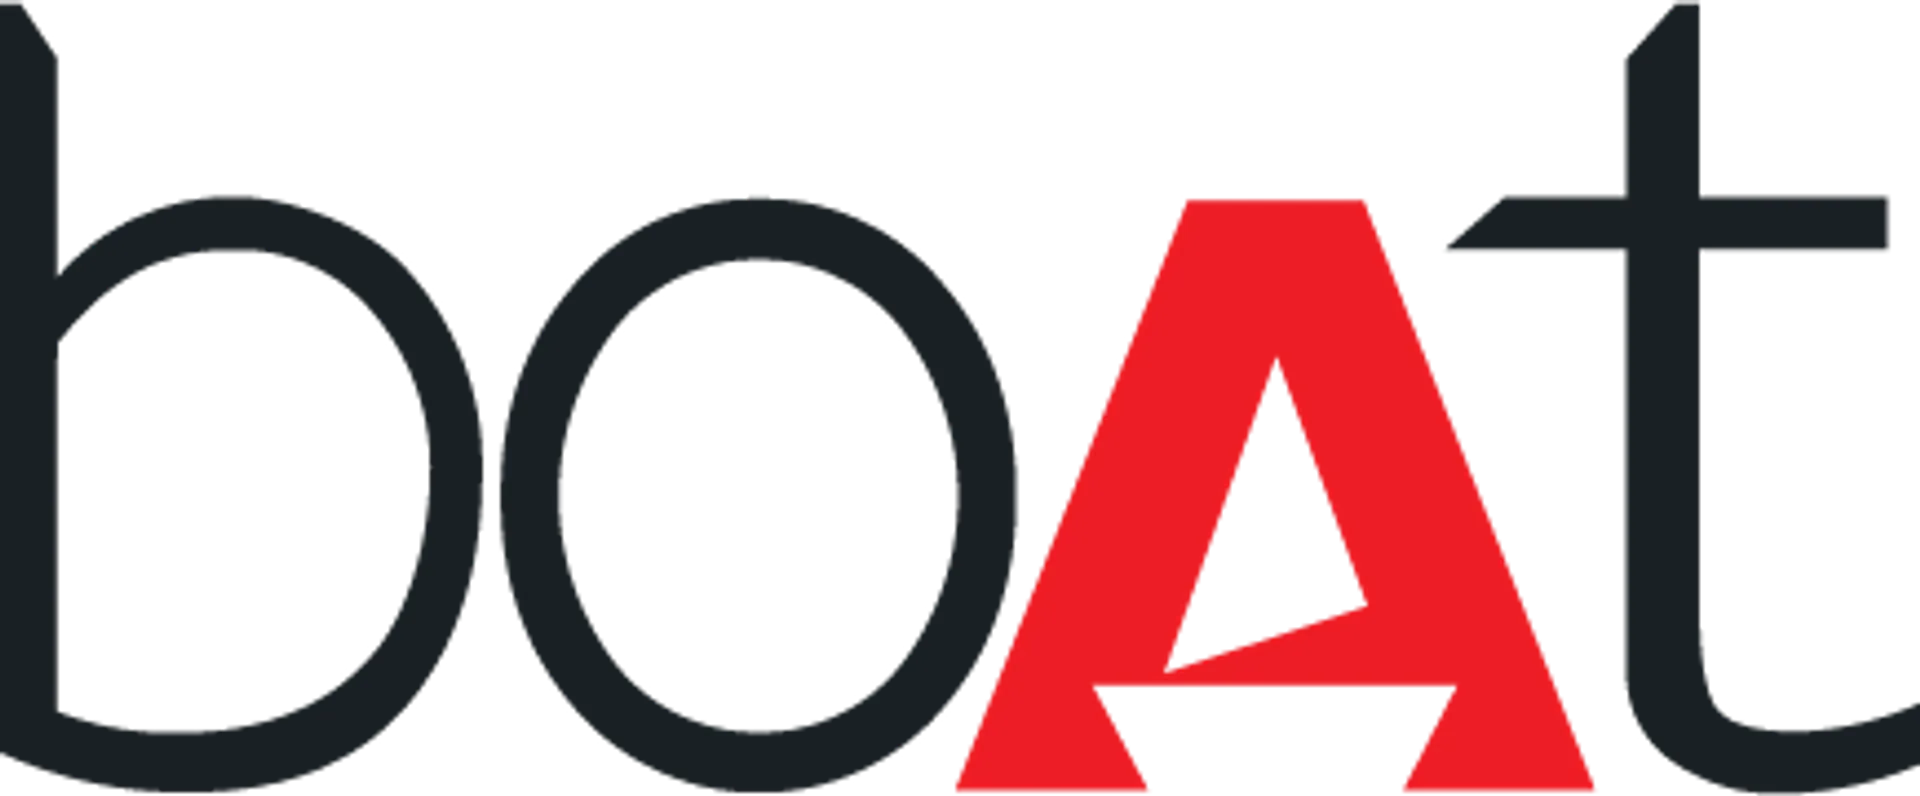 BOAT logo. Current catalogue